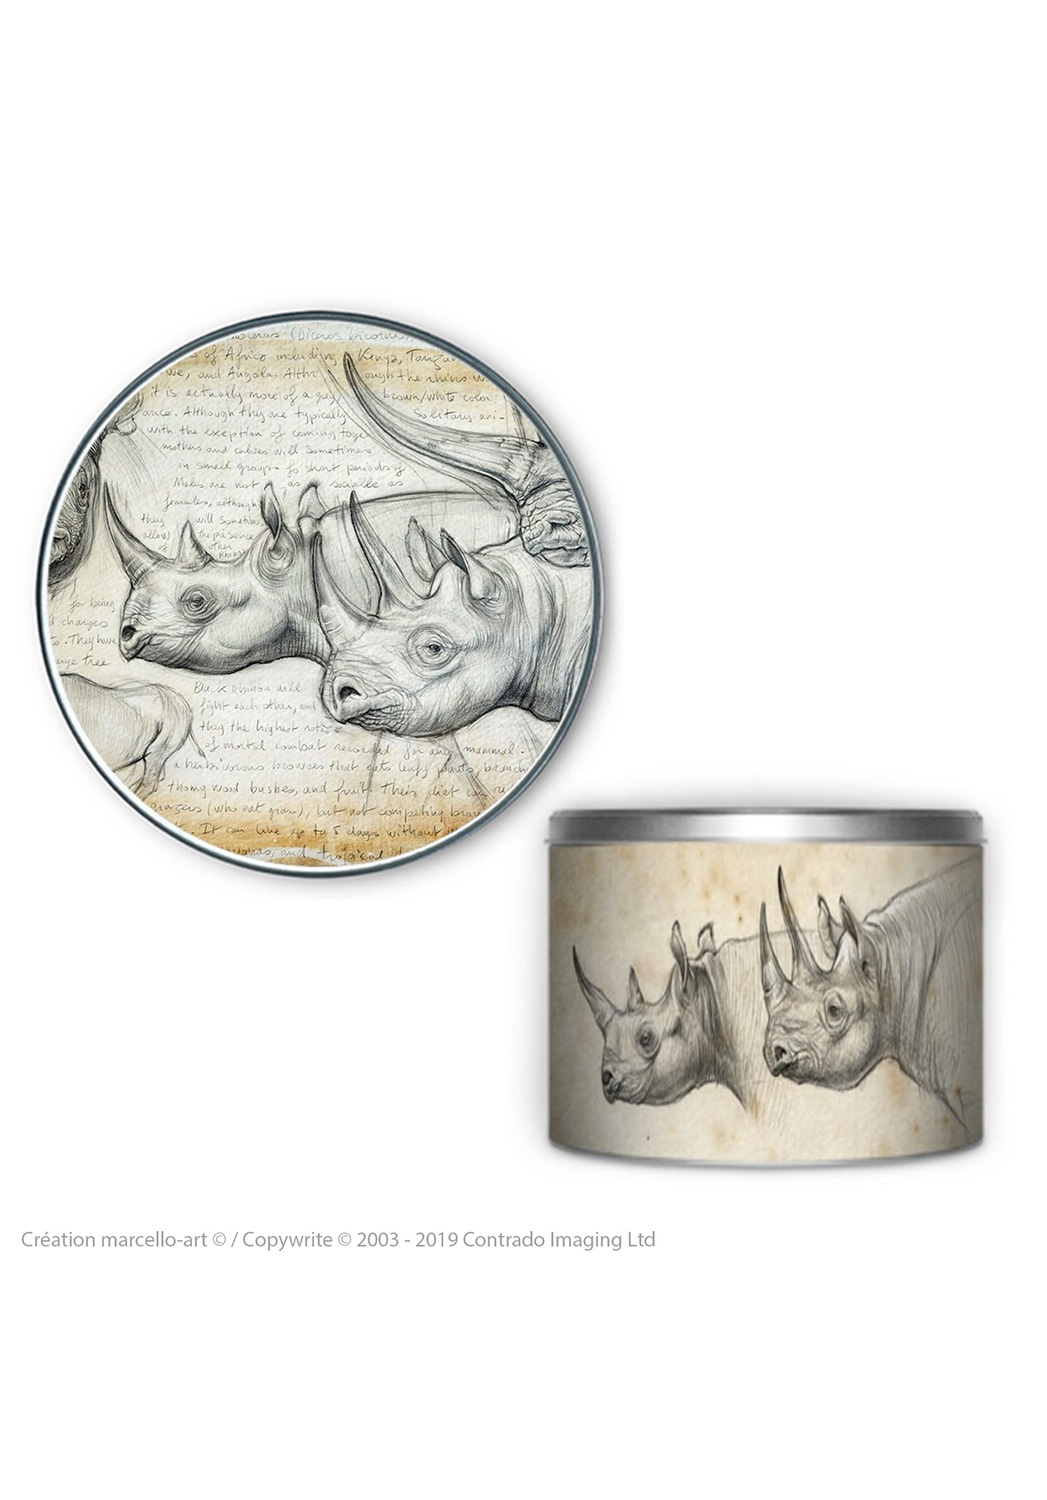 Marcello-art: Decoration accessoiries Round biscuit box 176 black rhino